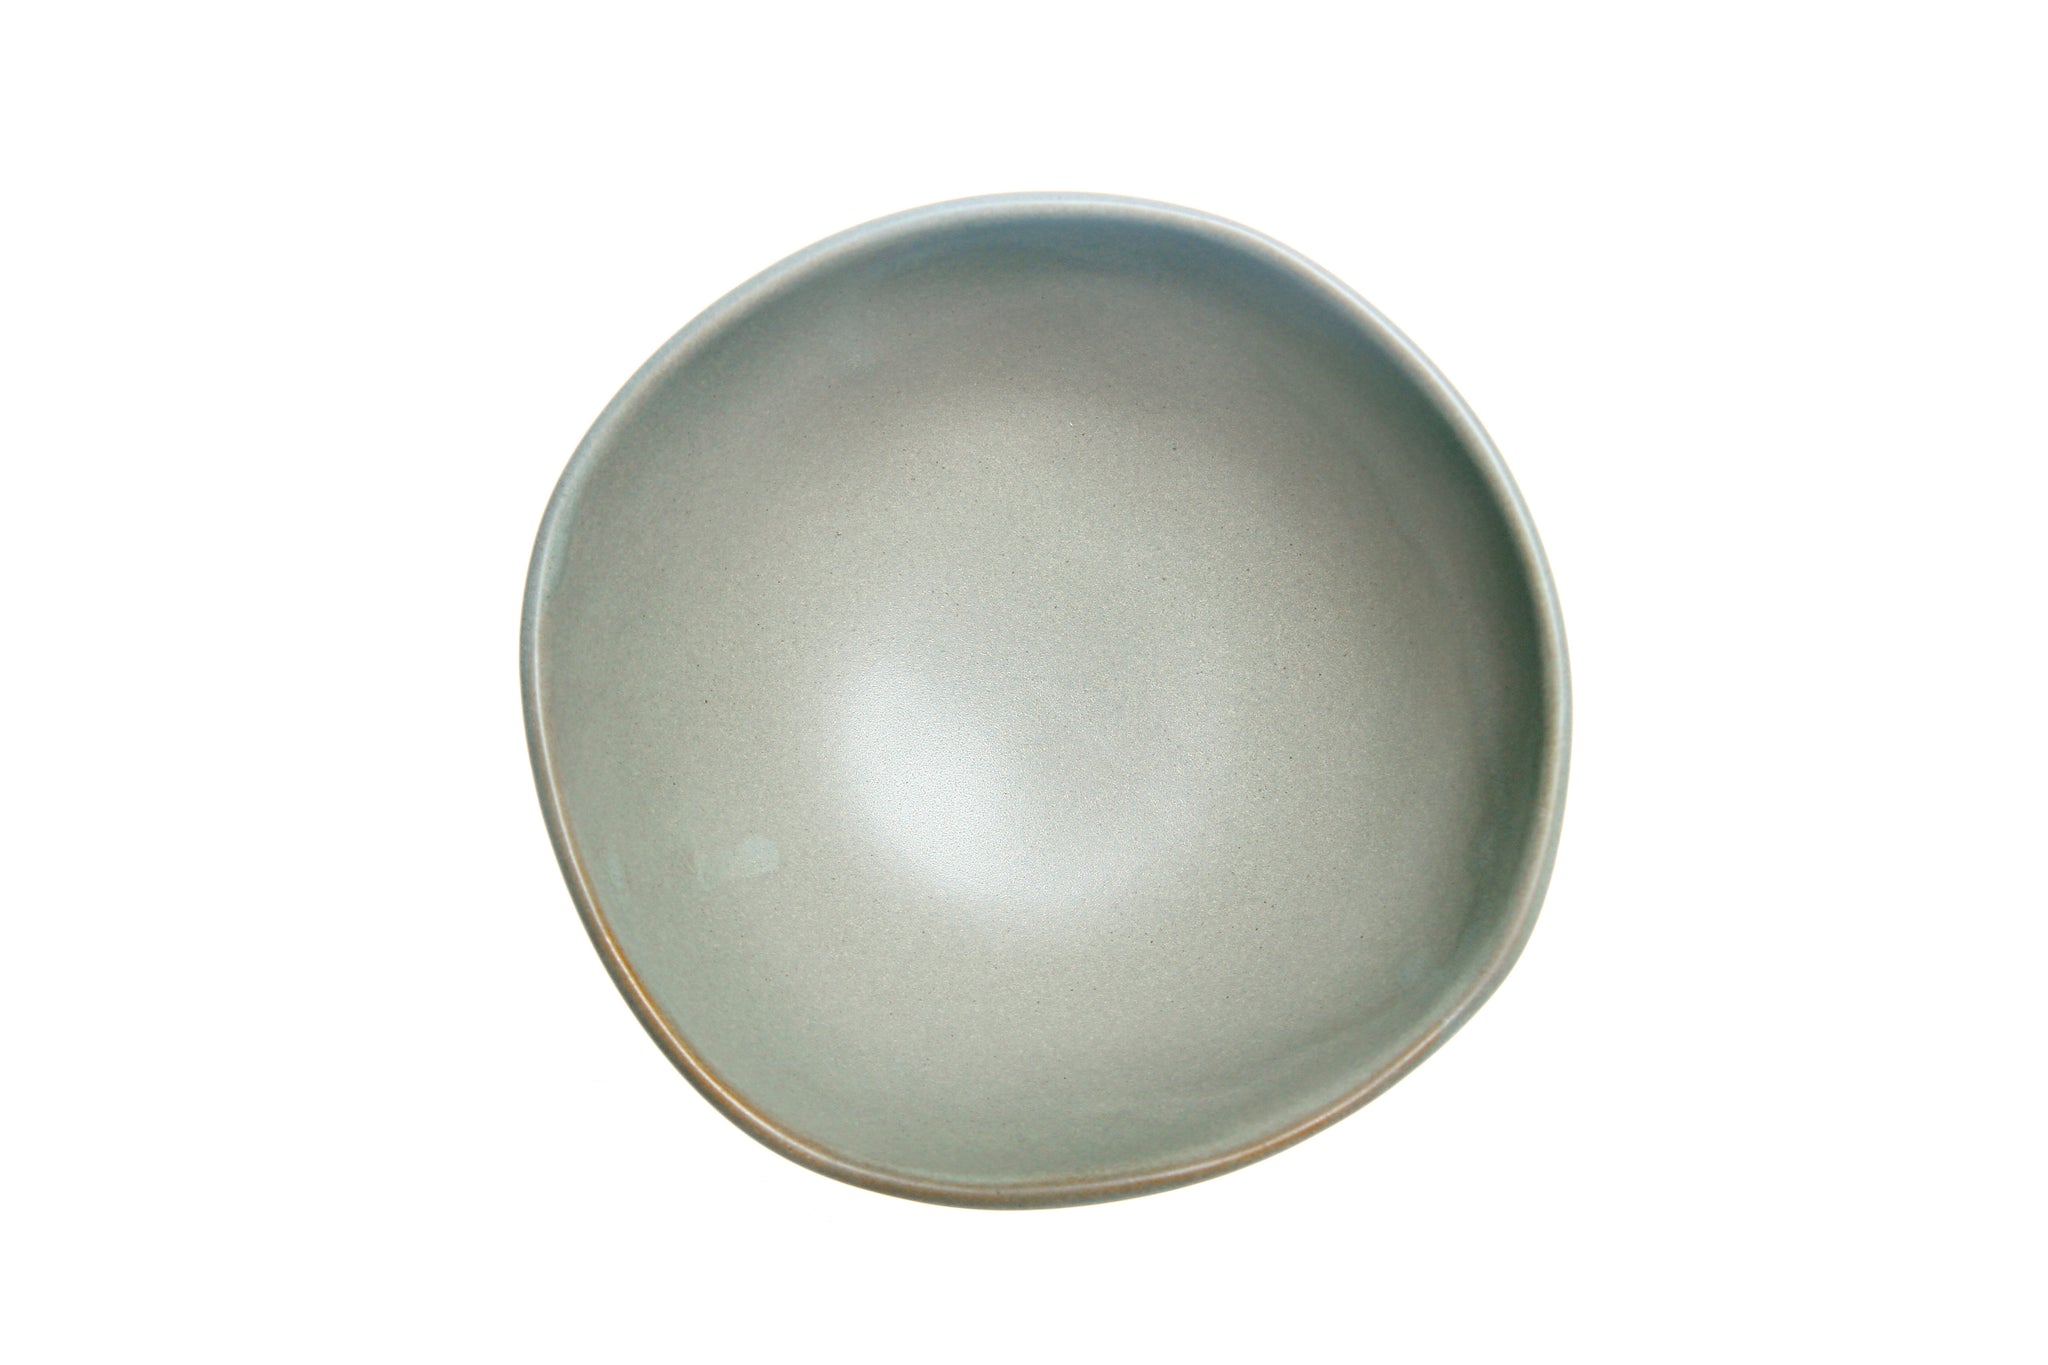 Elemental 15cm Cereal Bowl - Stone (4 Pack)